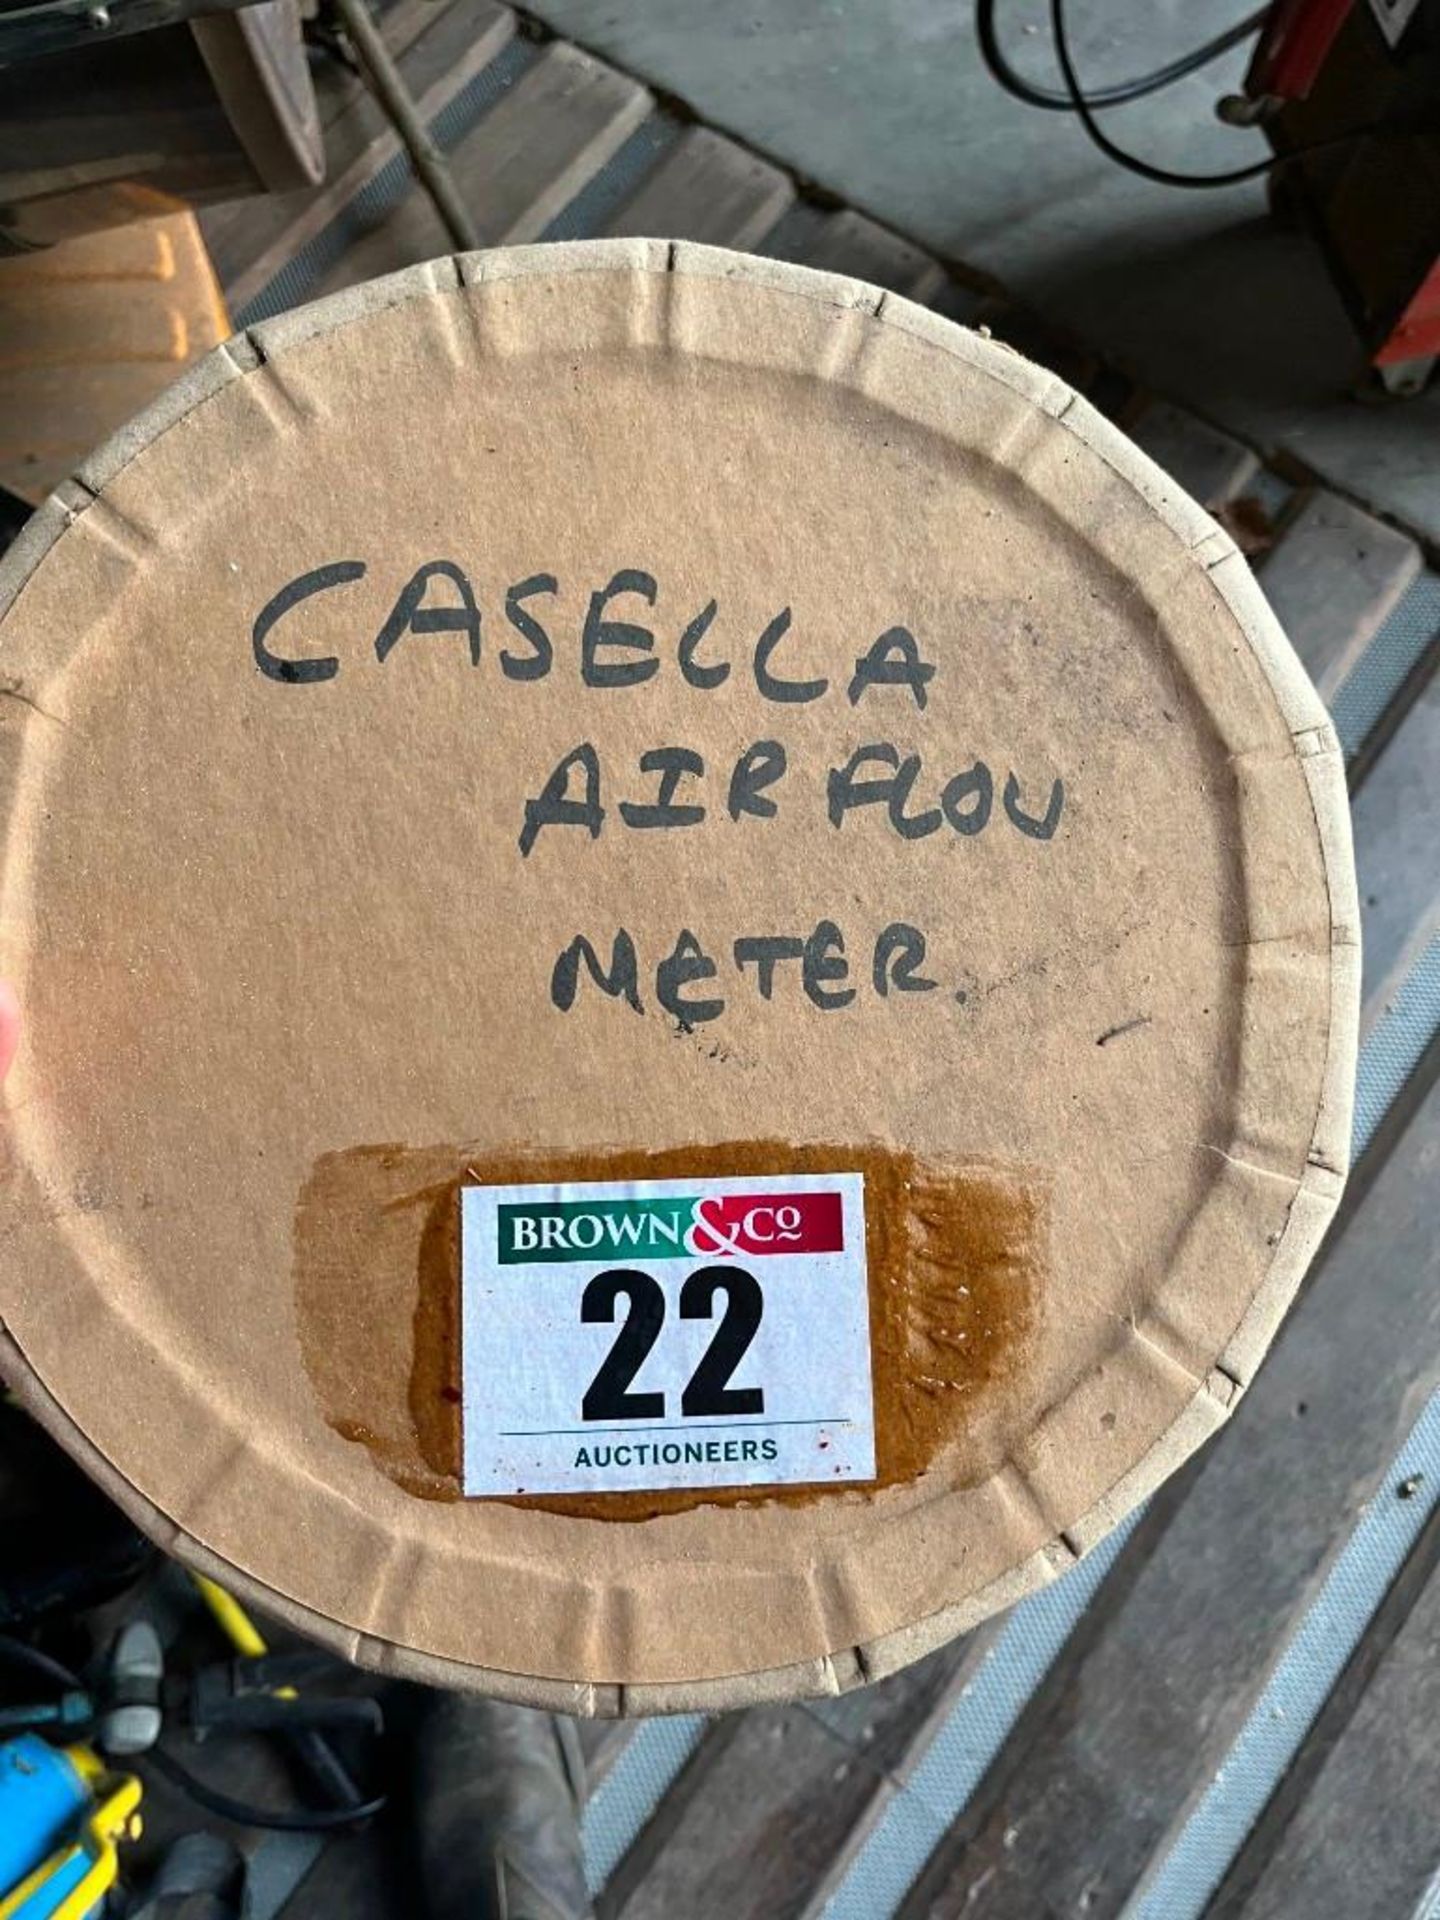 Casella Airflow Meter